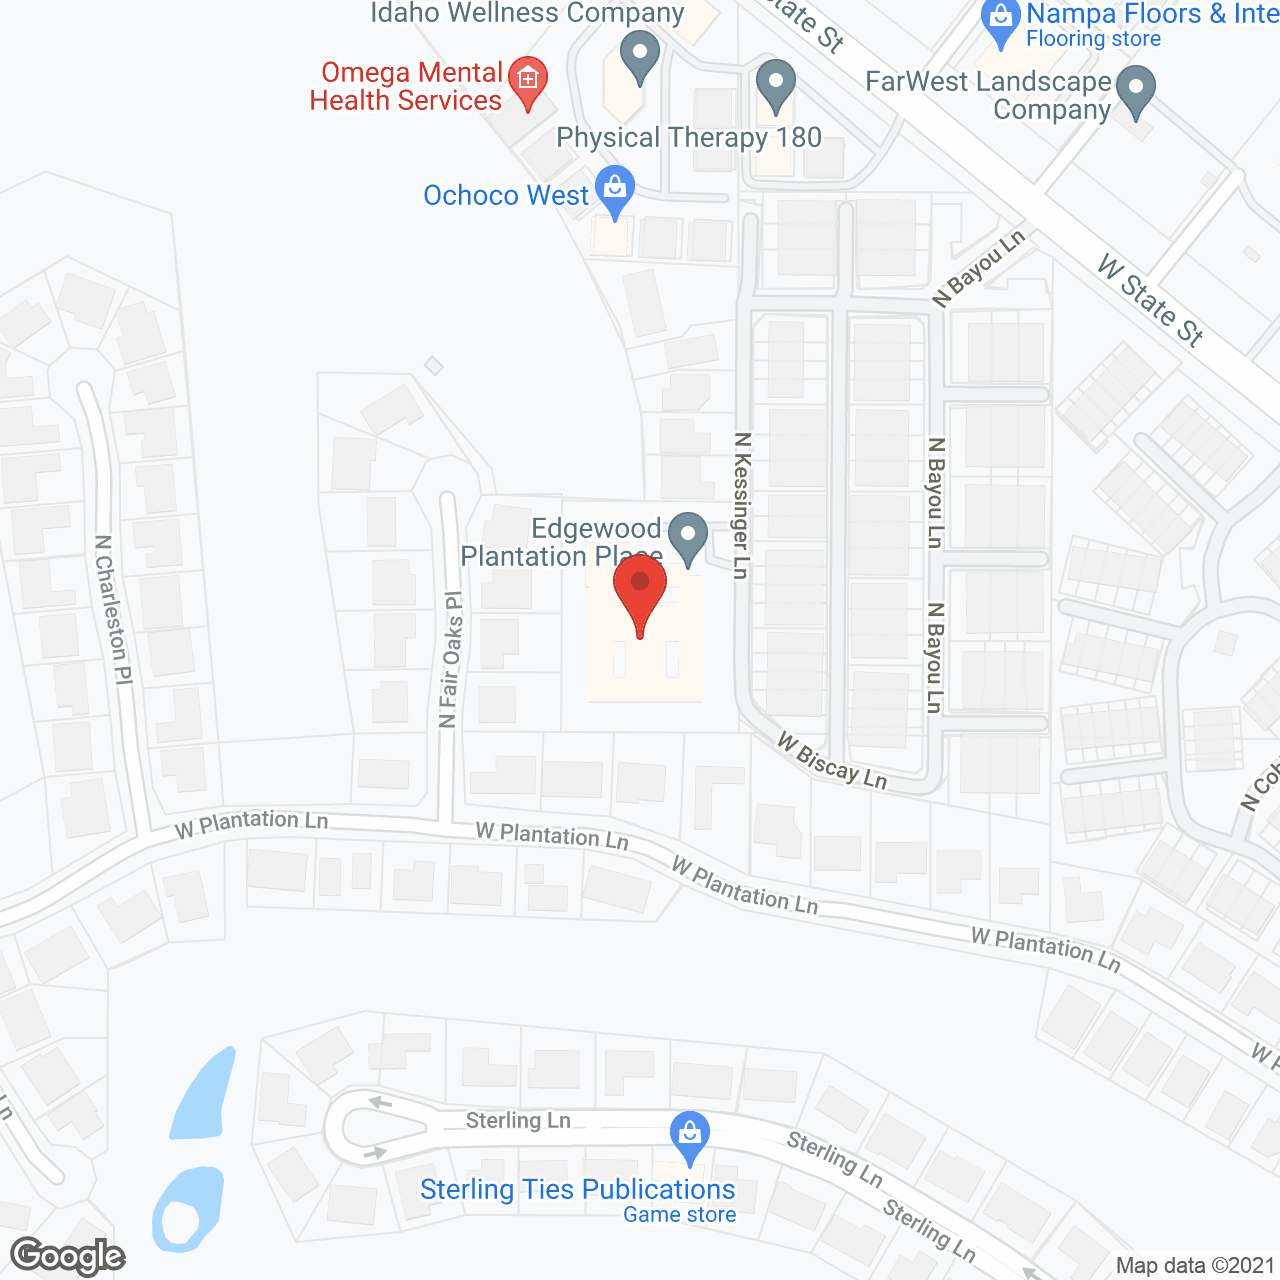 Edgewood Plantation Place, LLC in google map